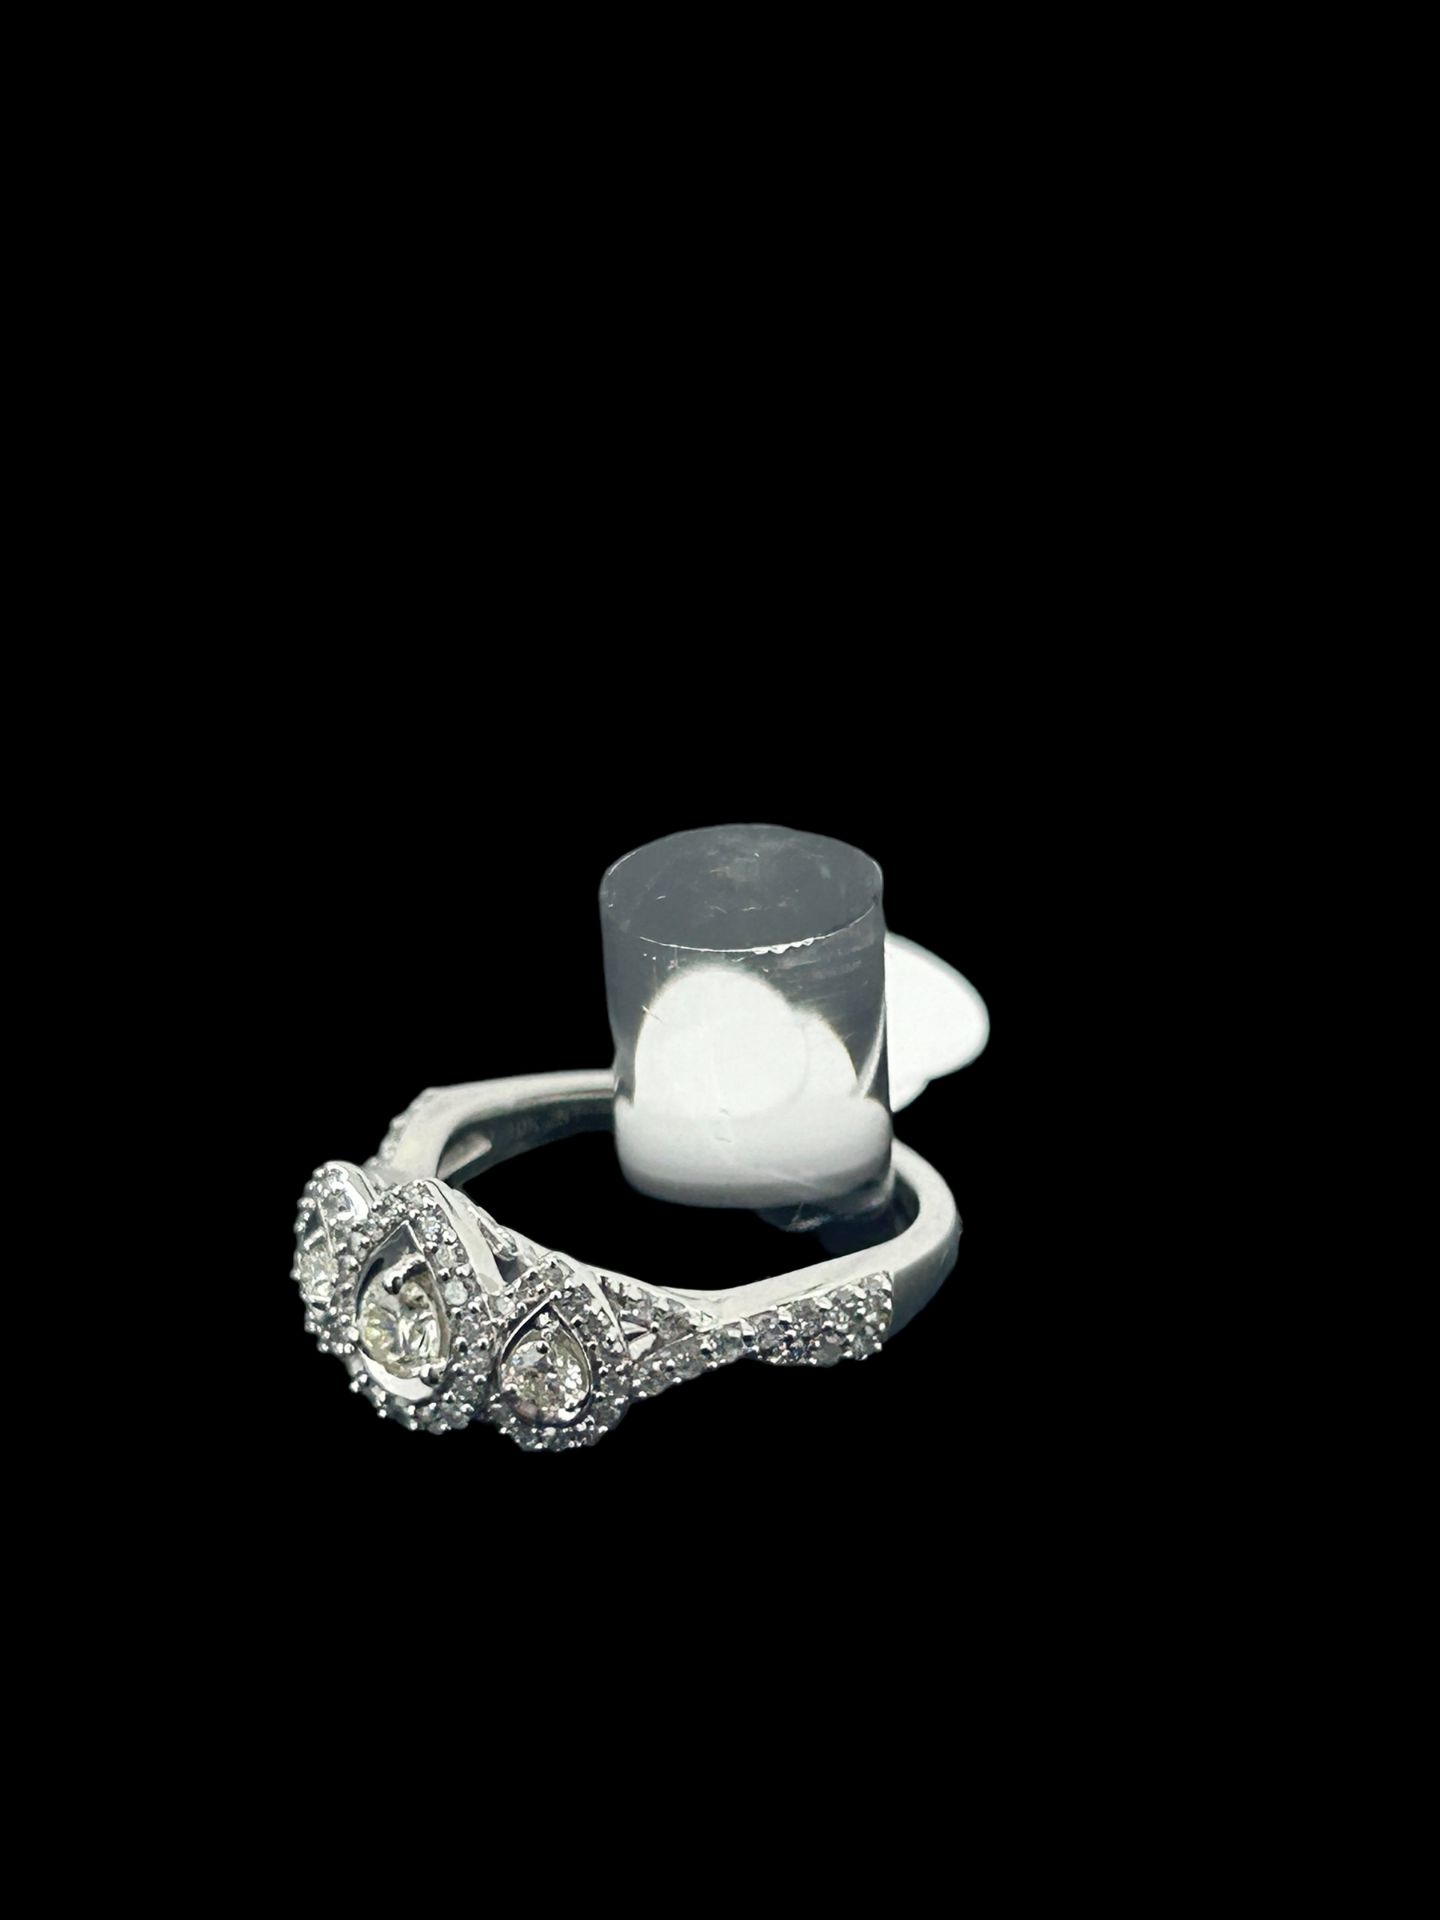 10k white gold cocktail ring, set with 1 carat of diamond